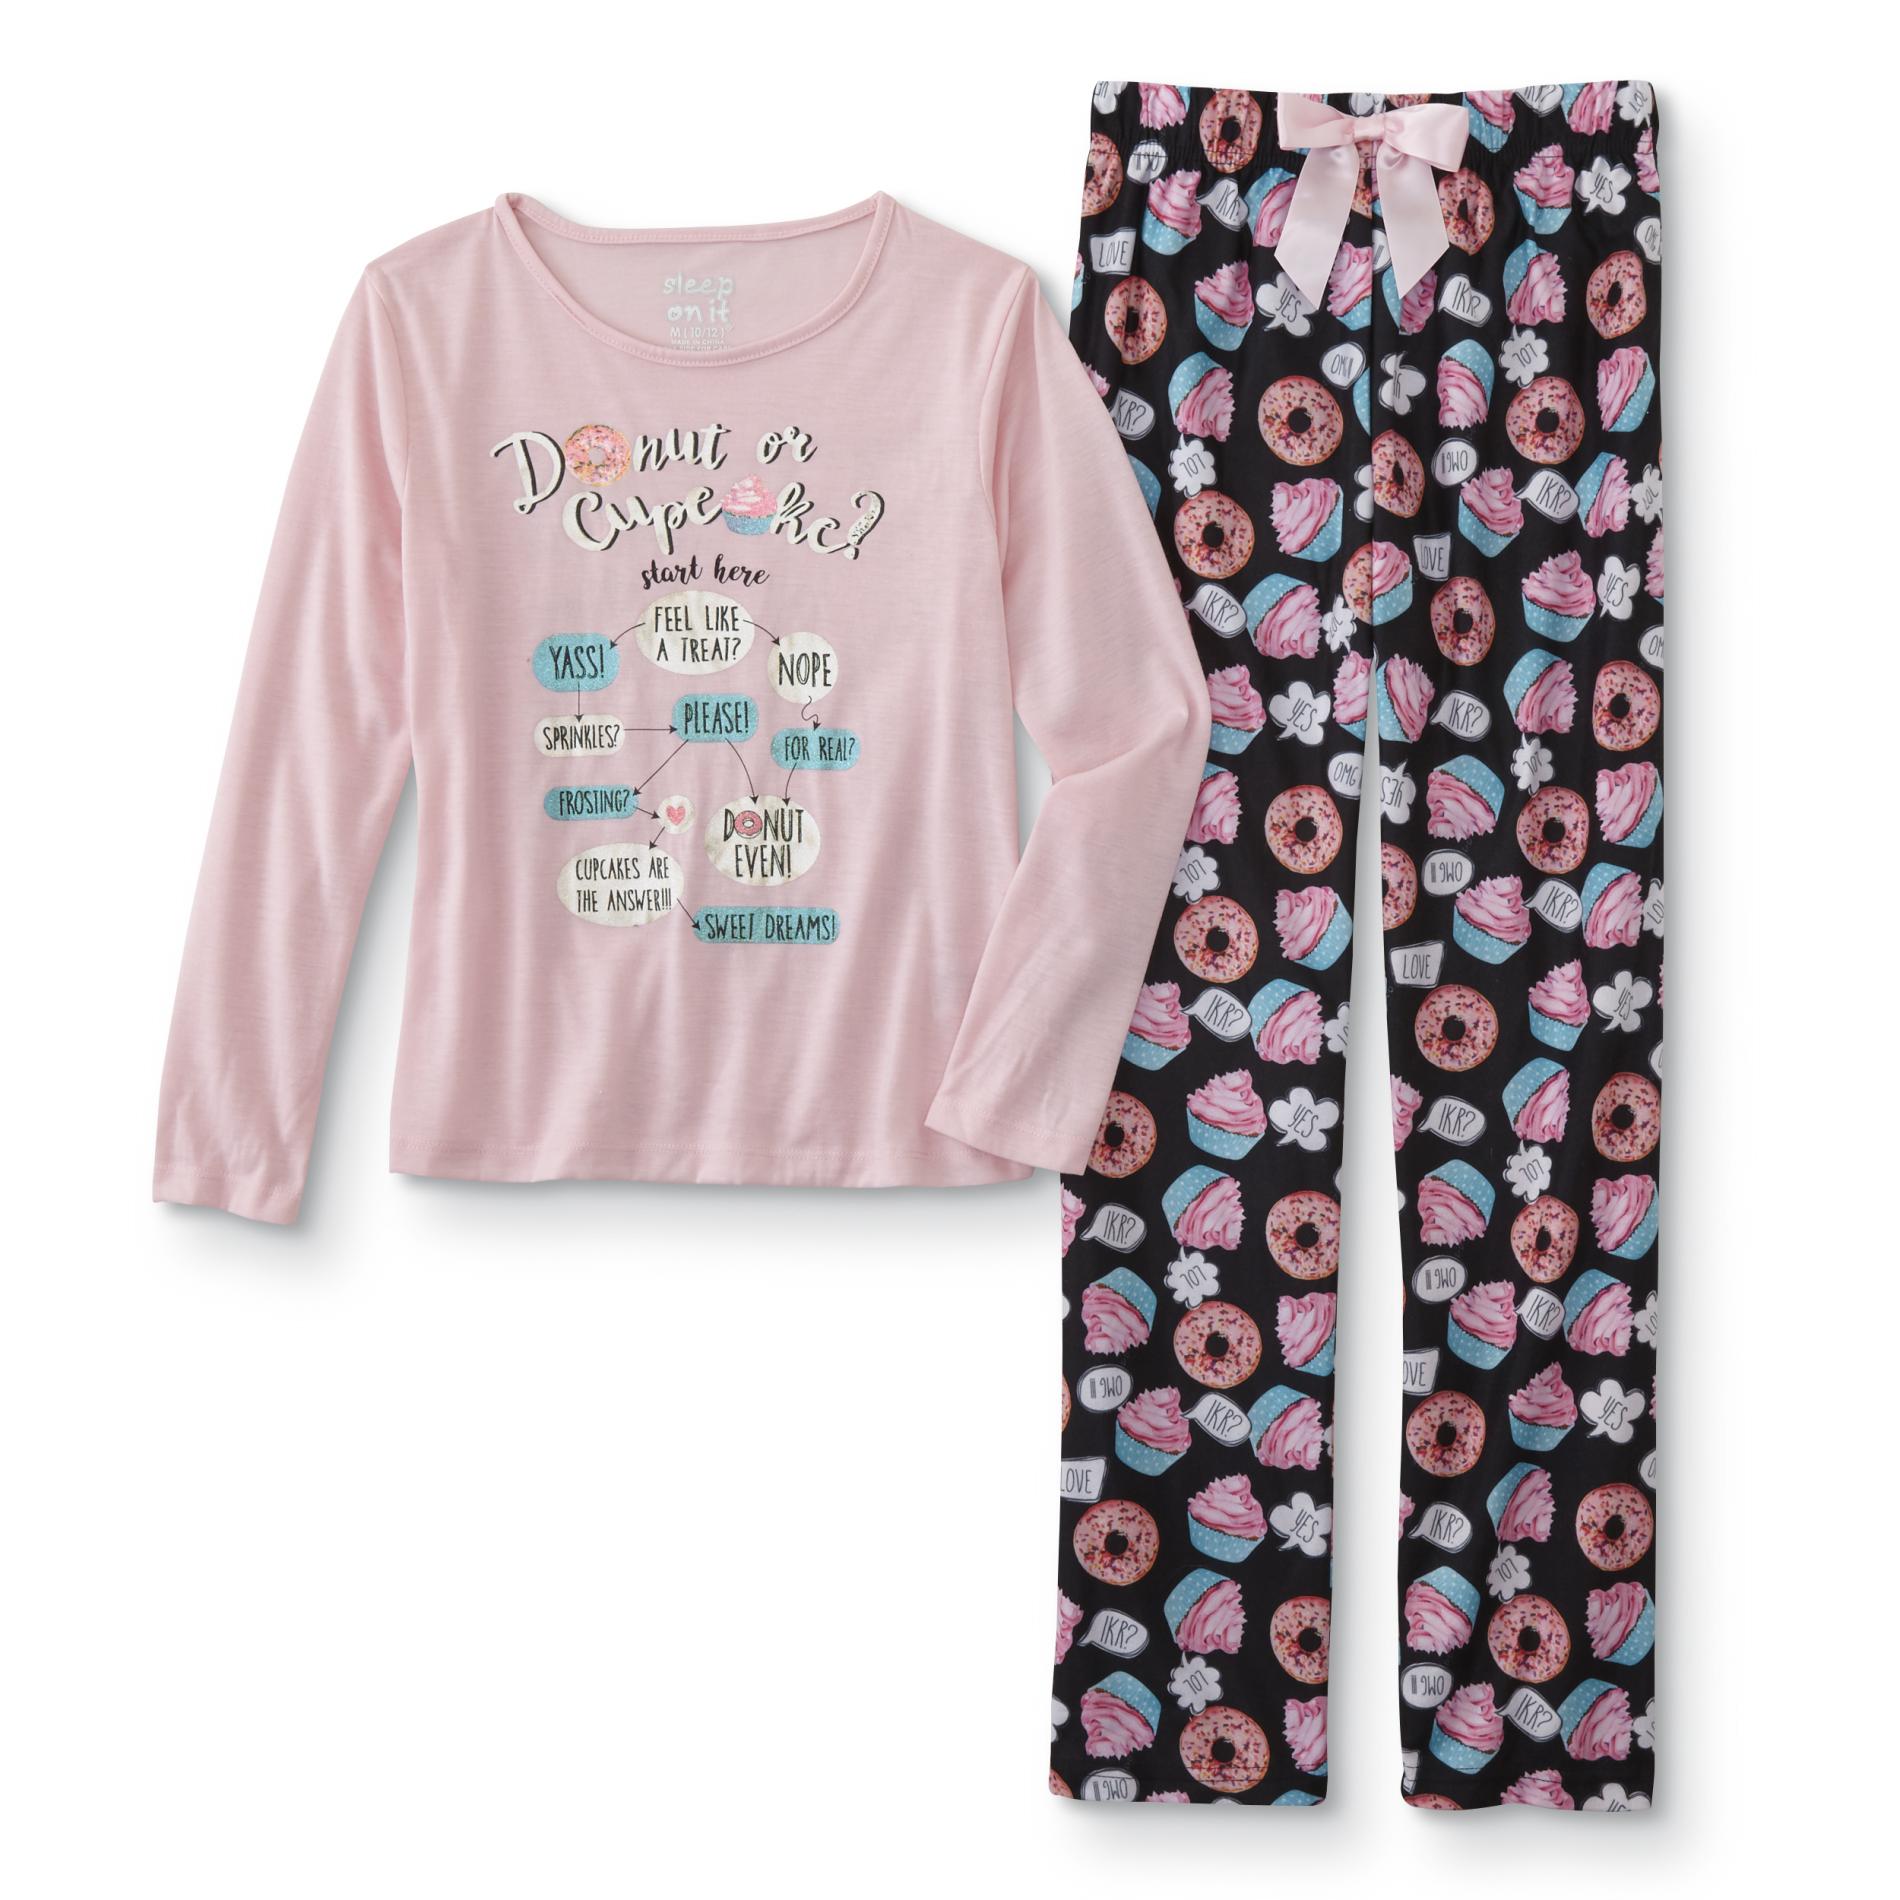 Sleep On It Girls' Pajama Top & Joggers - Donut or Cupcake?